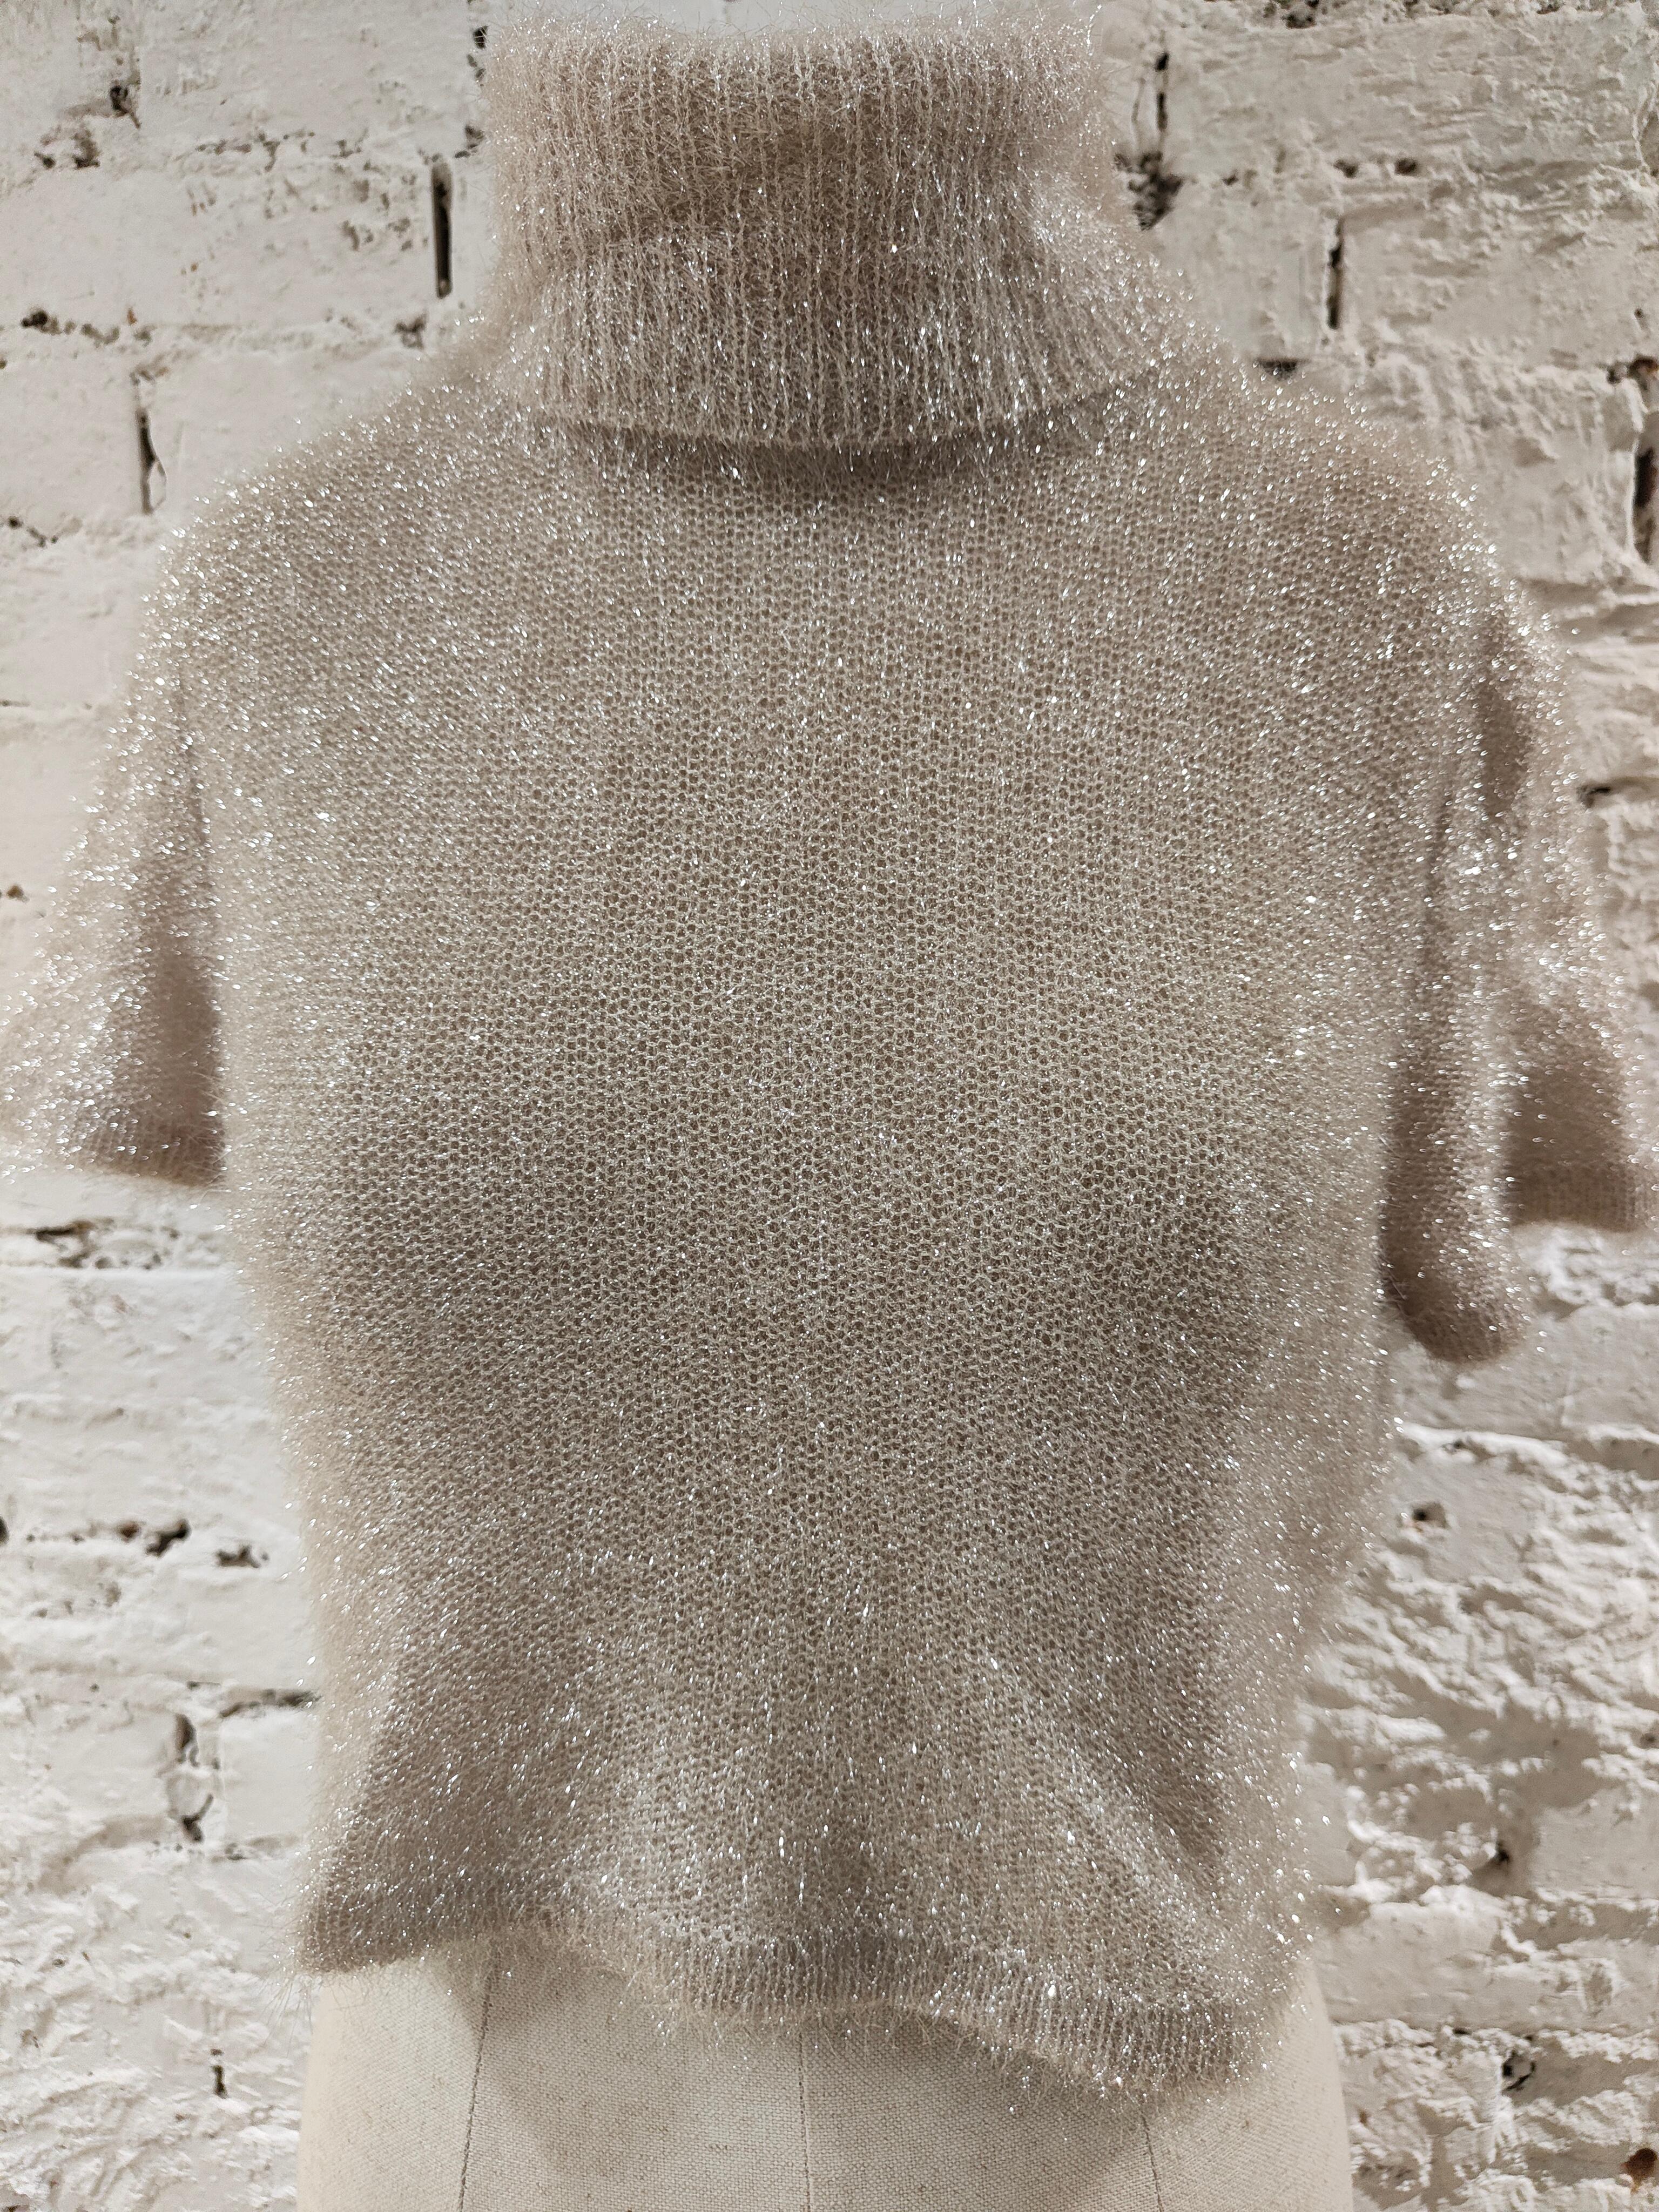 Byblos turtleneck sweater
size 44
light gold tone
composition: Polyamid
total lenght 37 cm